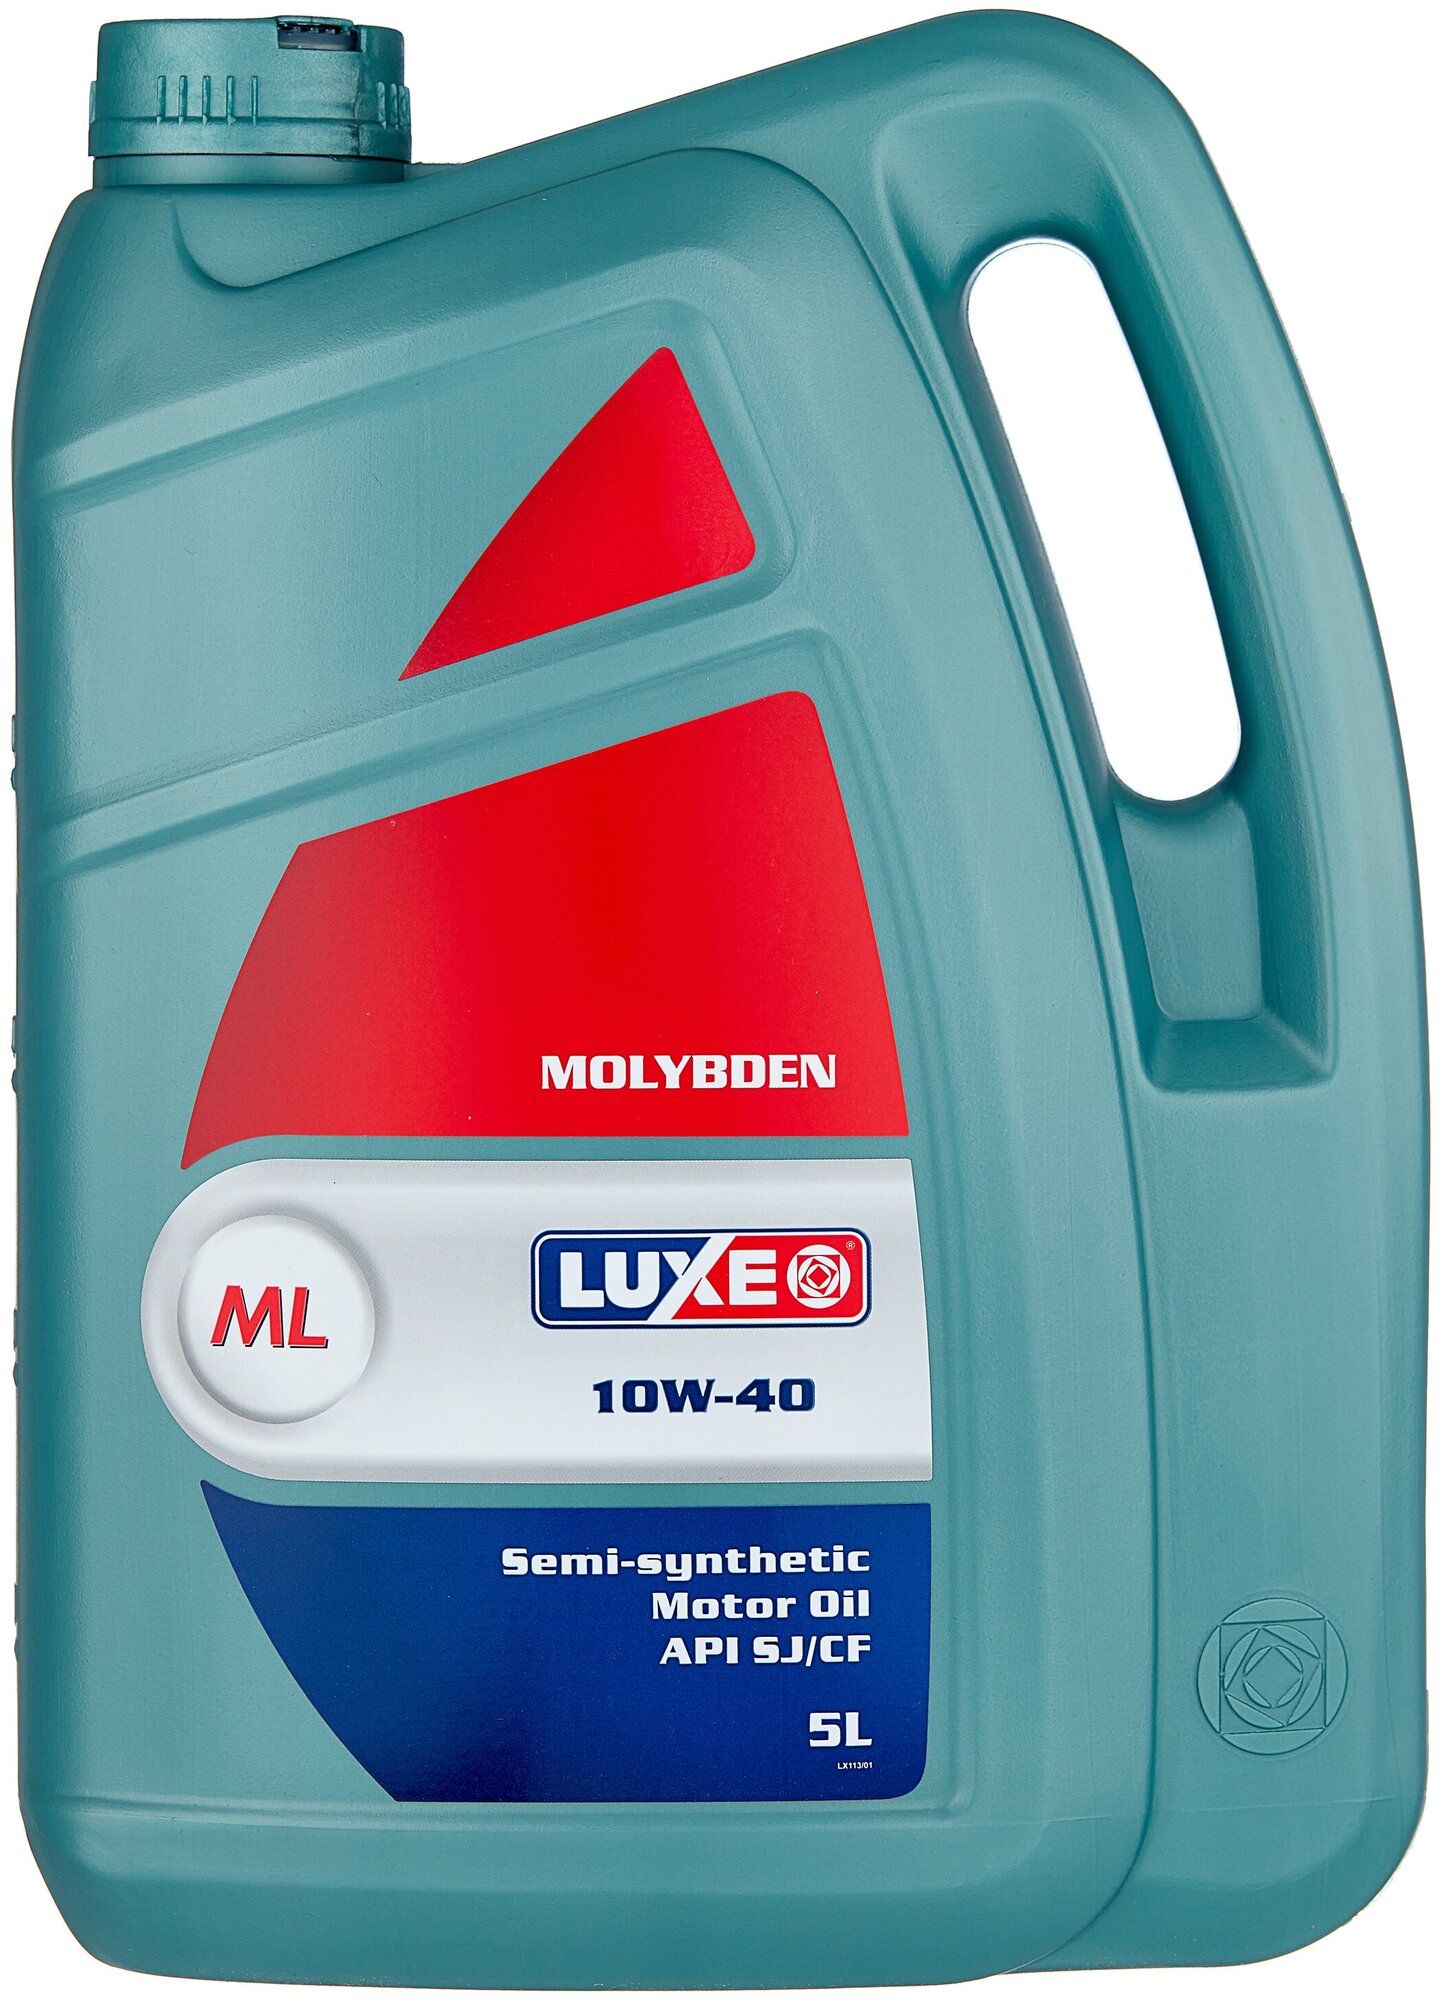 Полусинтетическое моторное масло LUXE Molybden 10W-40